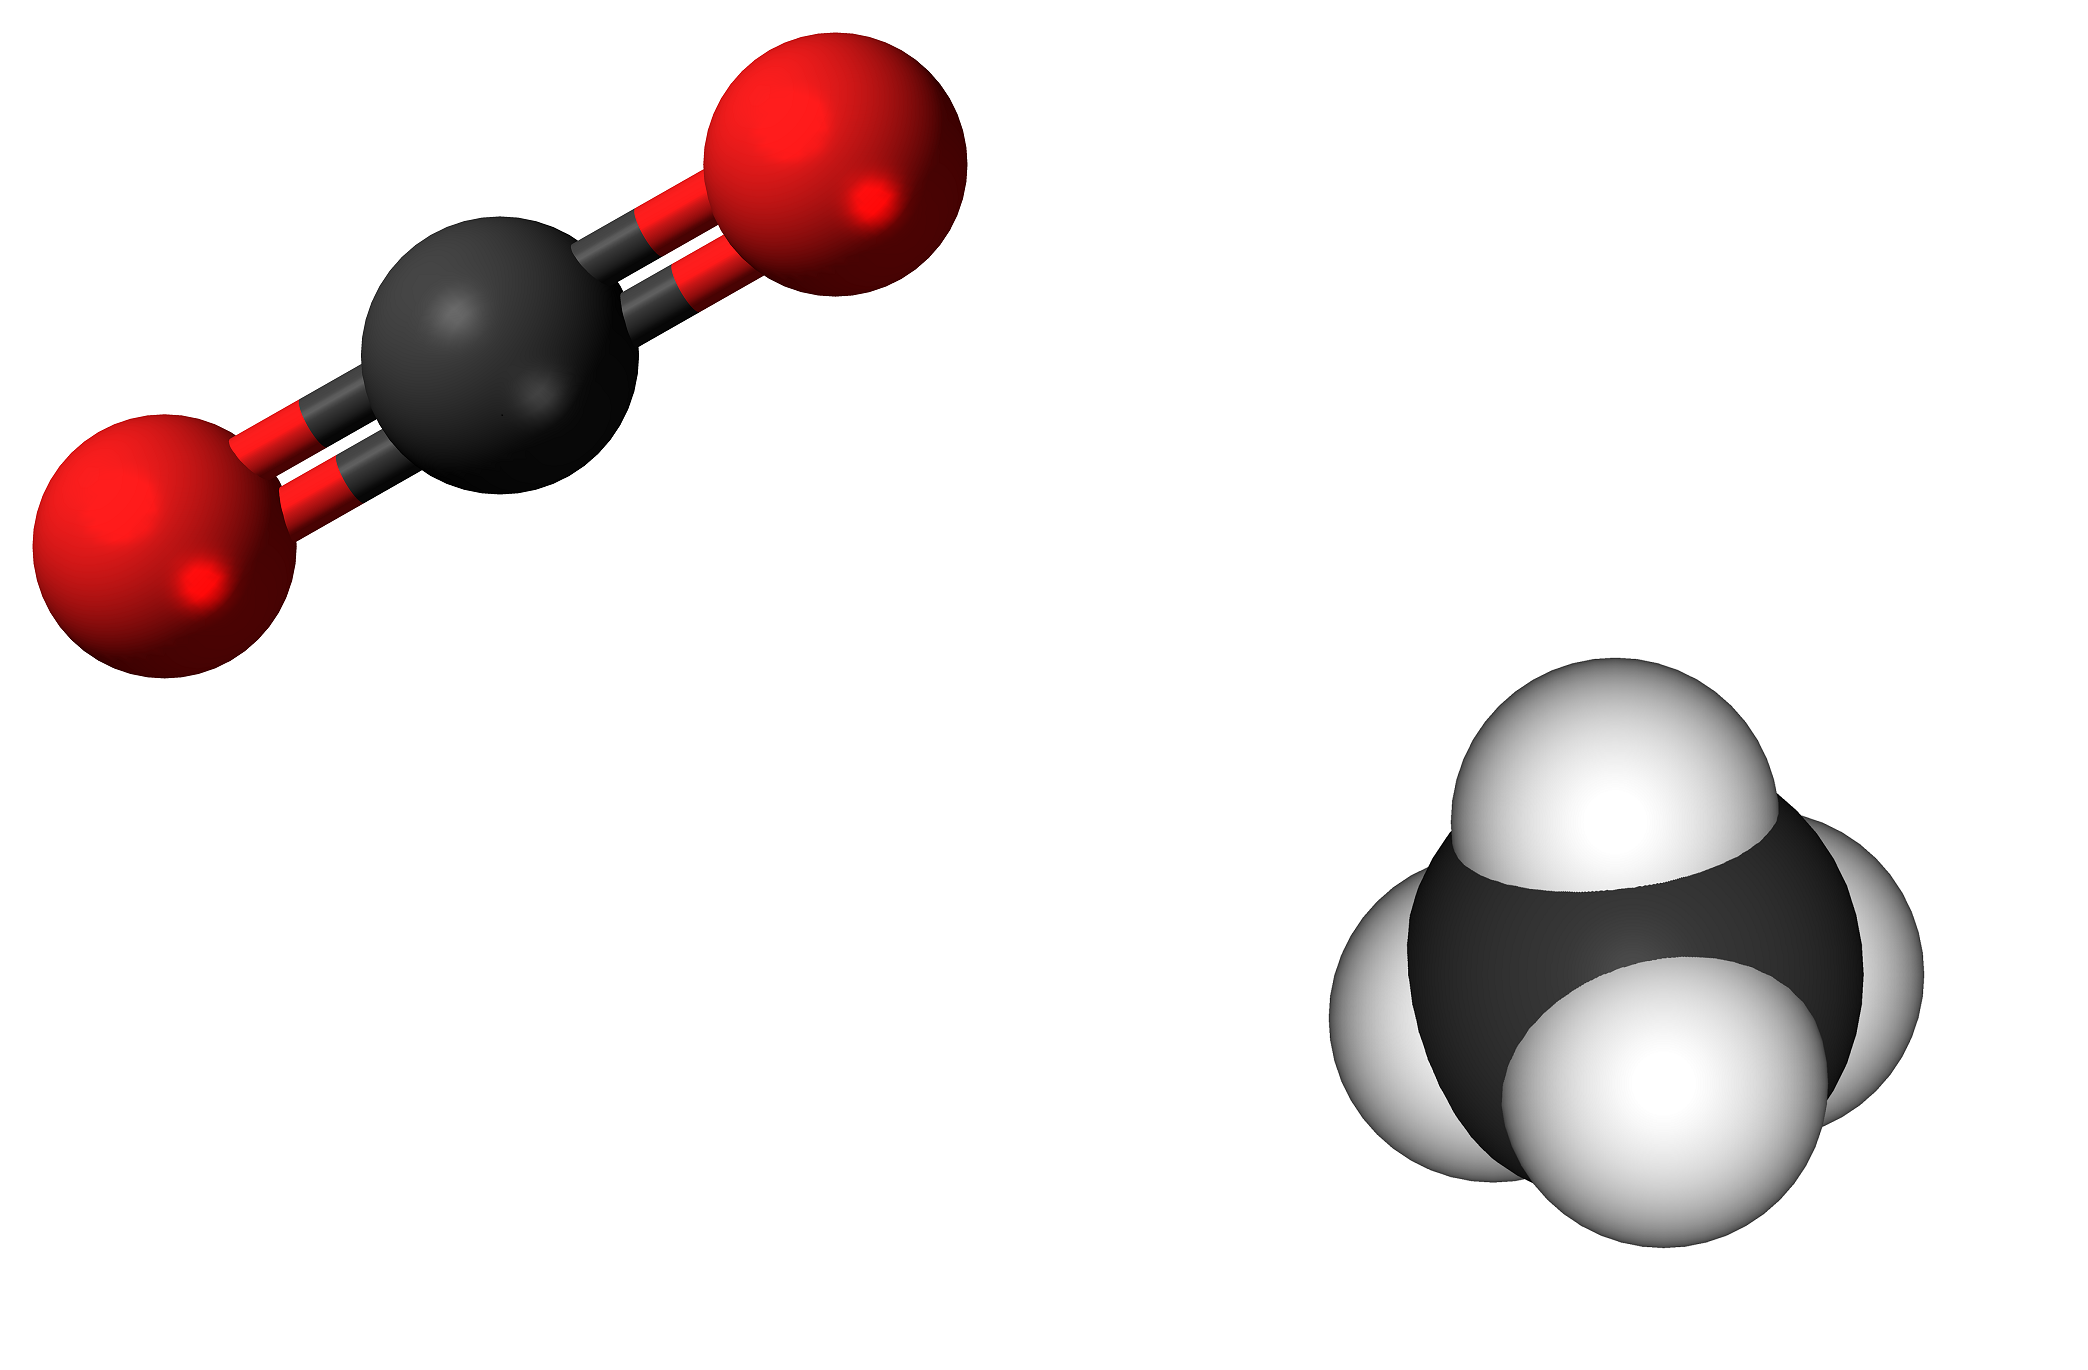 Ch 4 co2. Молекула метана ch4. Модель метана ch4. Метан ch4. Ch2 ch2 молекула.